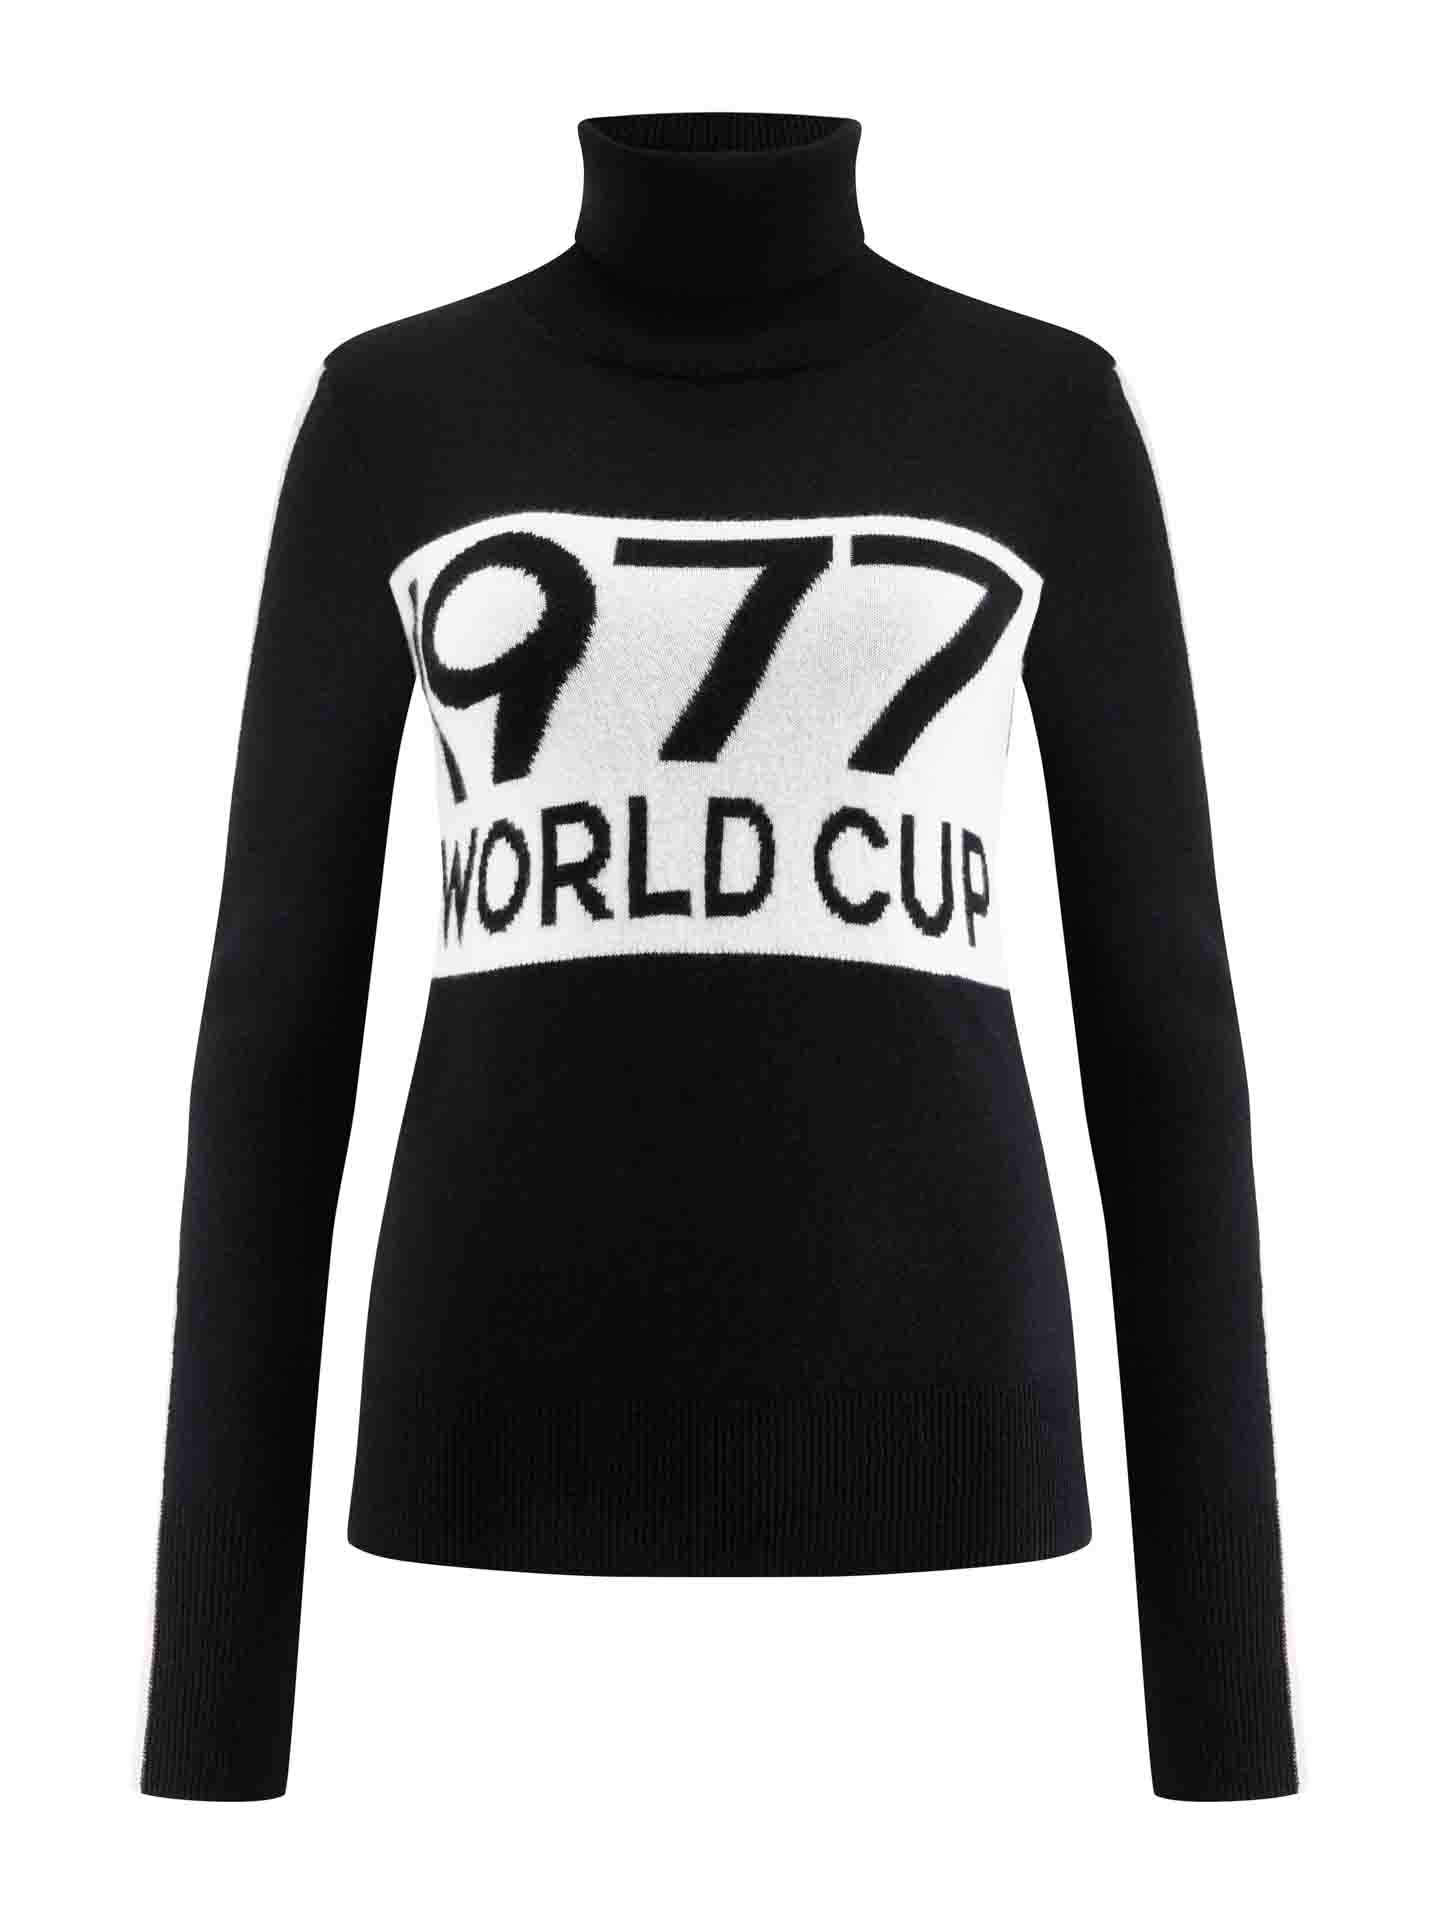 1977 World Cup Sweater Women Black